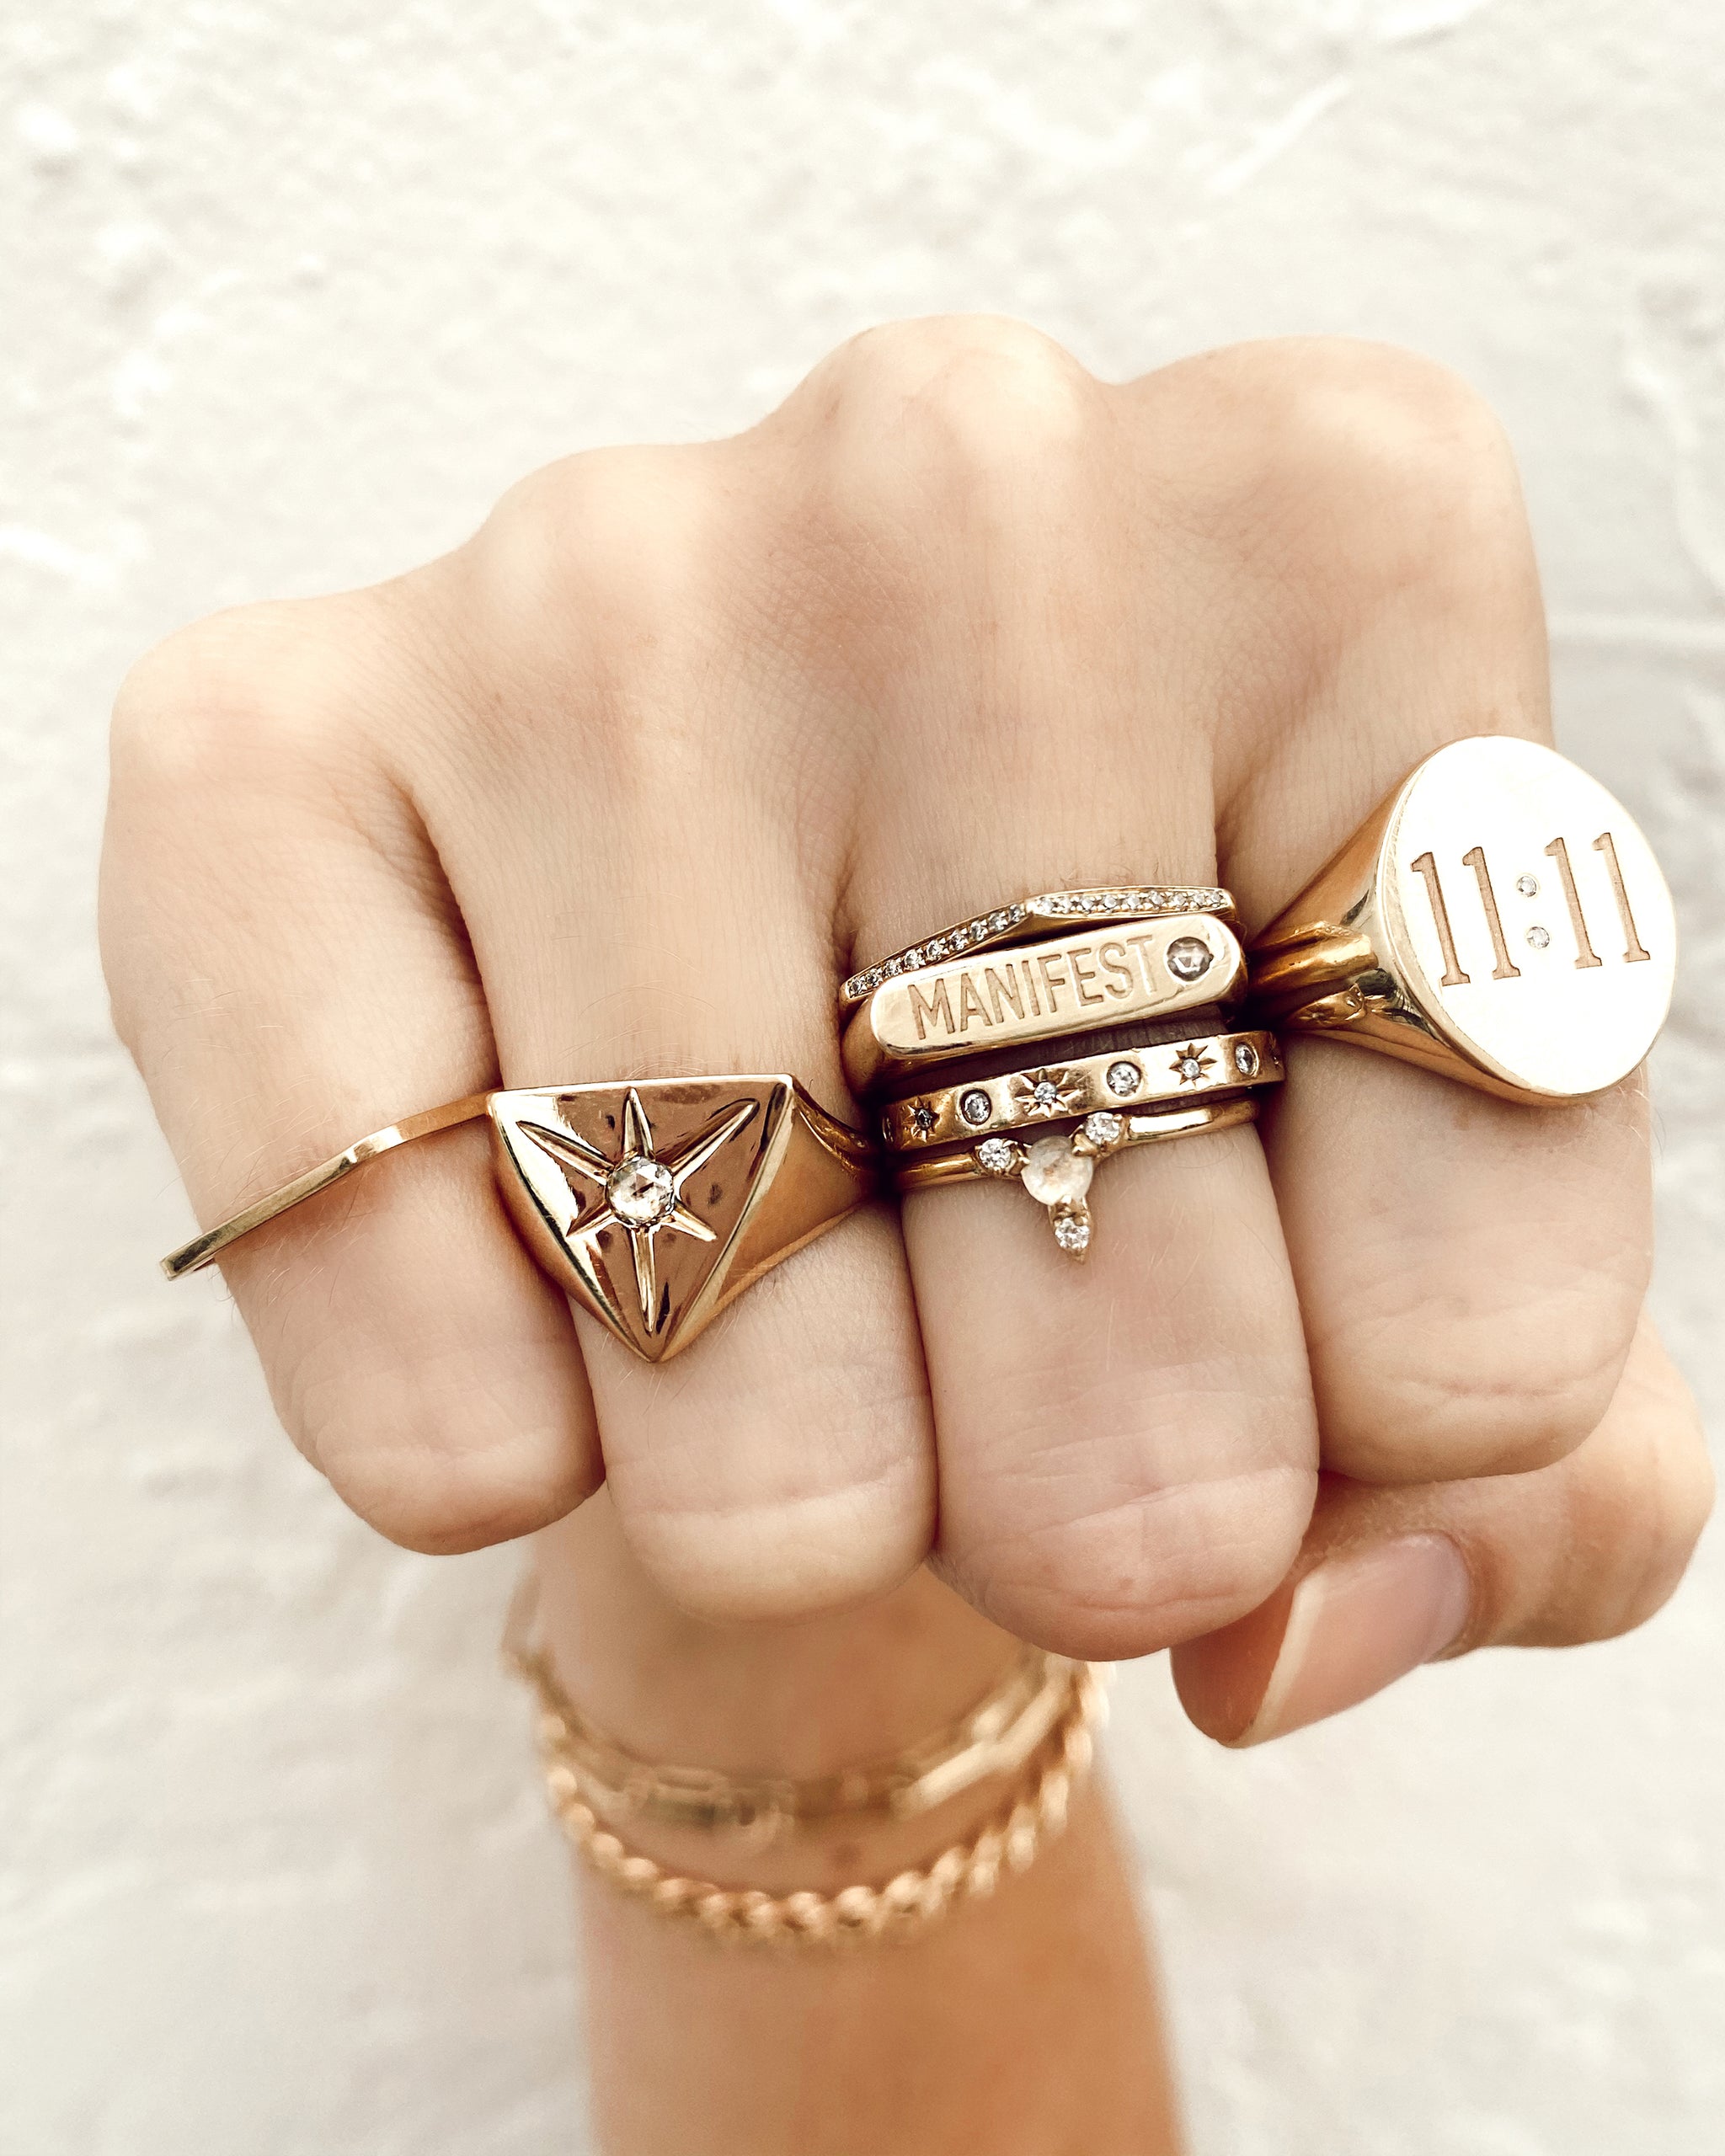 In the Stars, 14k Gold & Diamond Pyramid Signet Ring